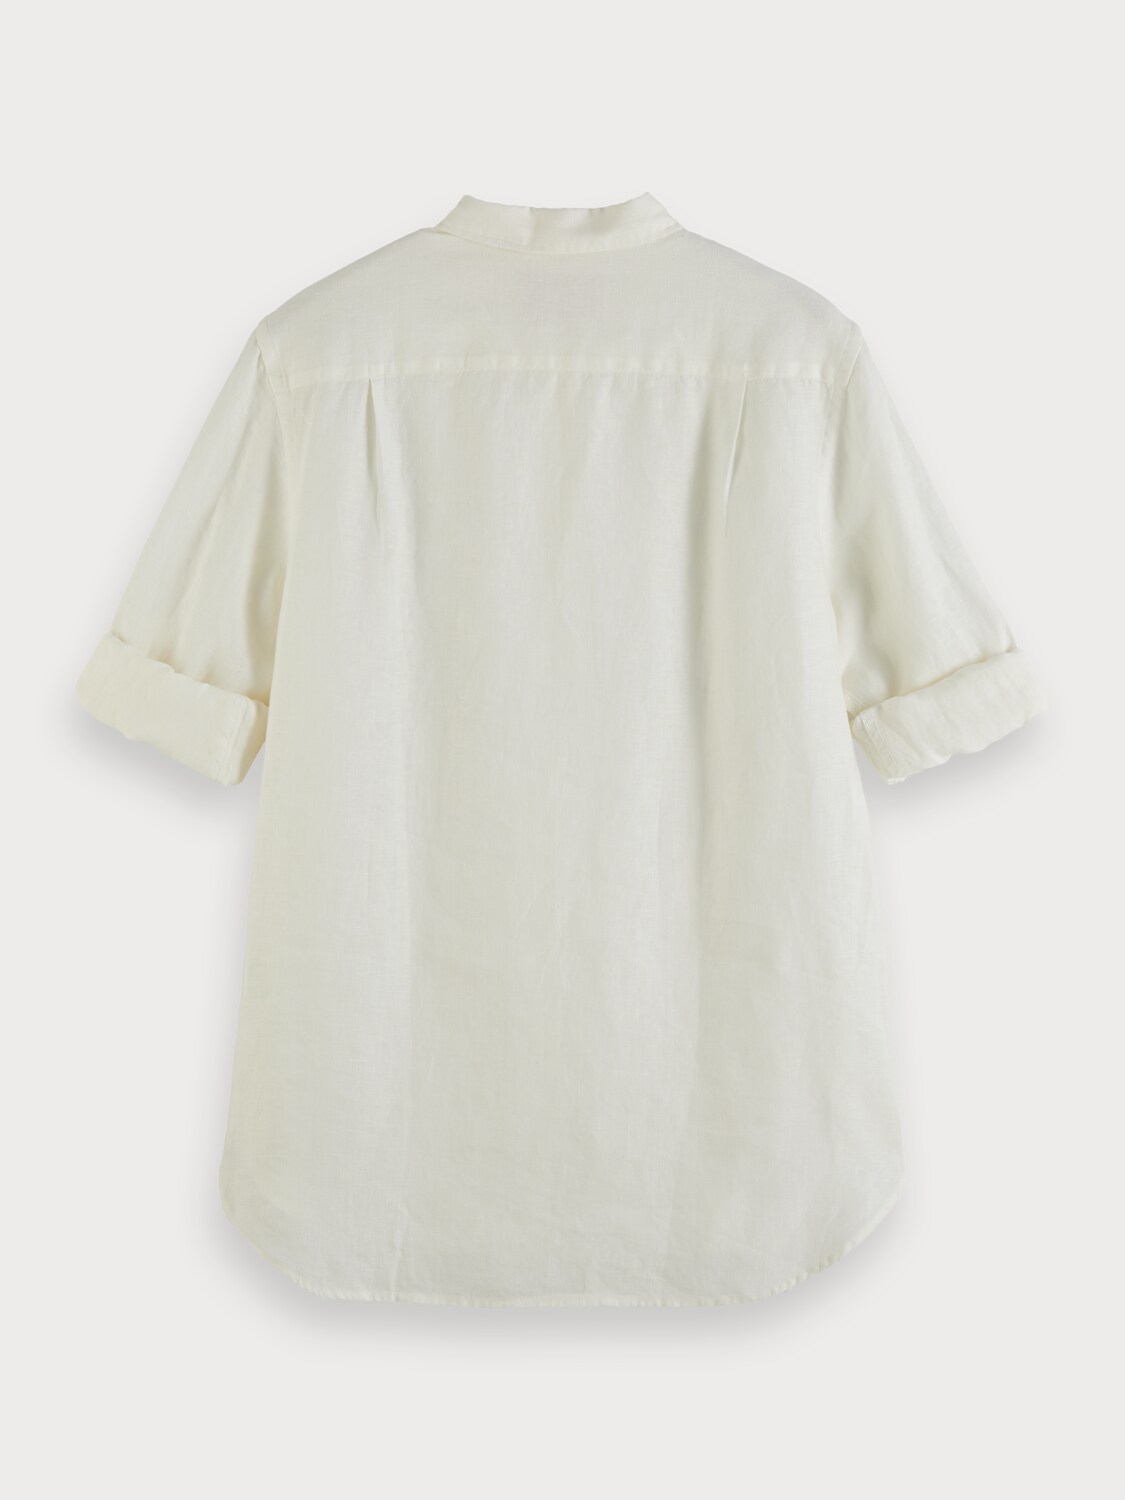 REGULAR FIT- Garment-dyed linen shirt with sleeve roll-up